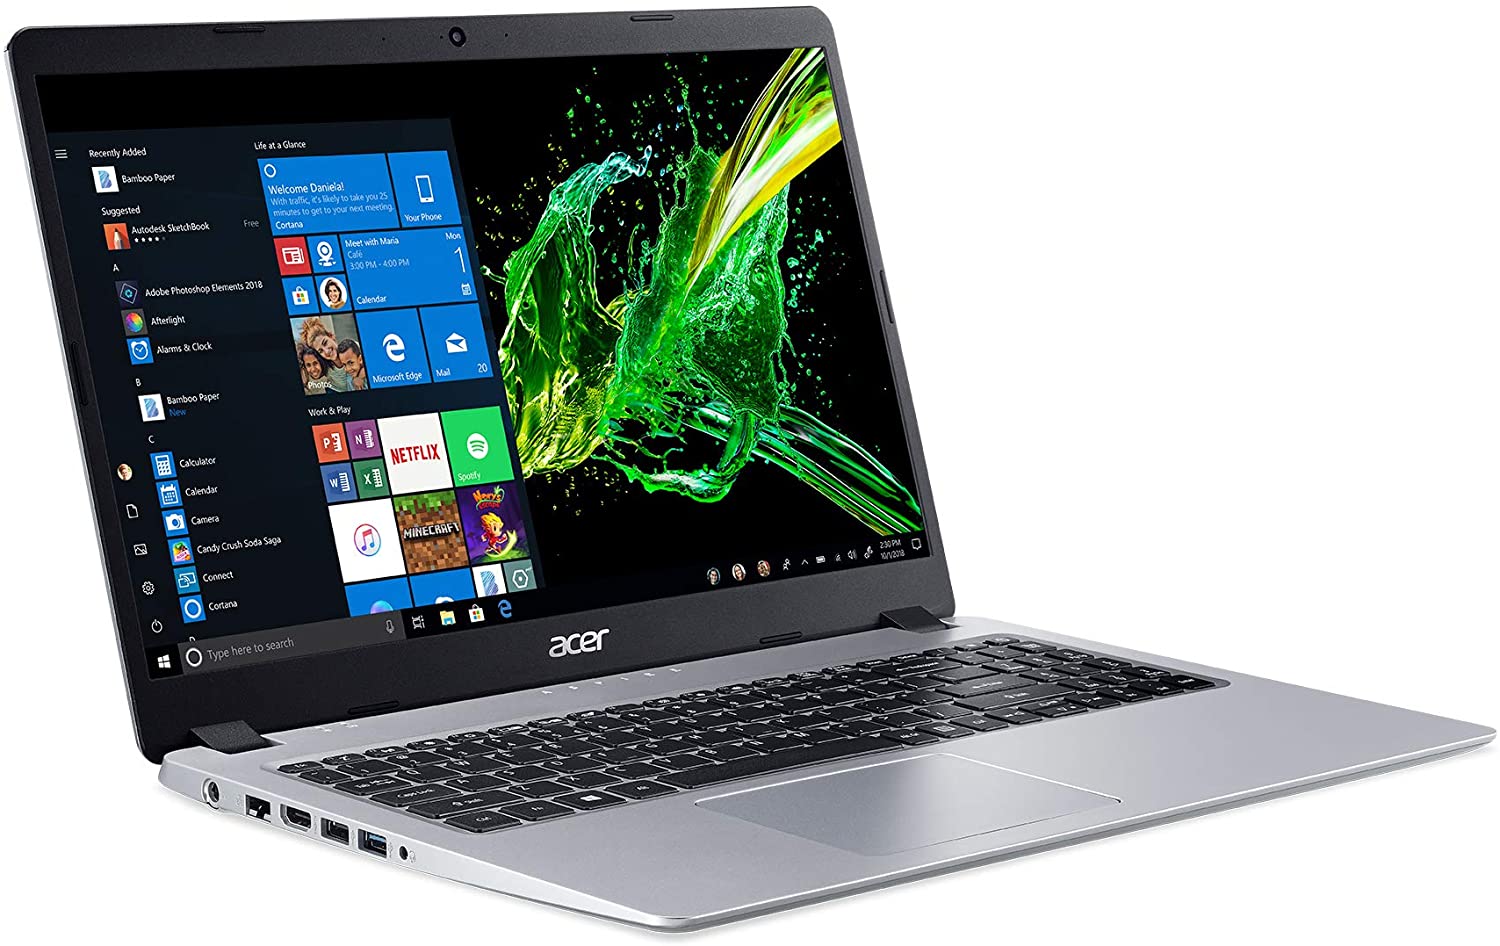  Acer Aspire 5 17-inch laptops